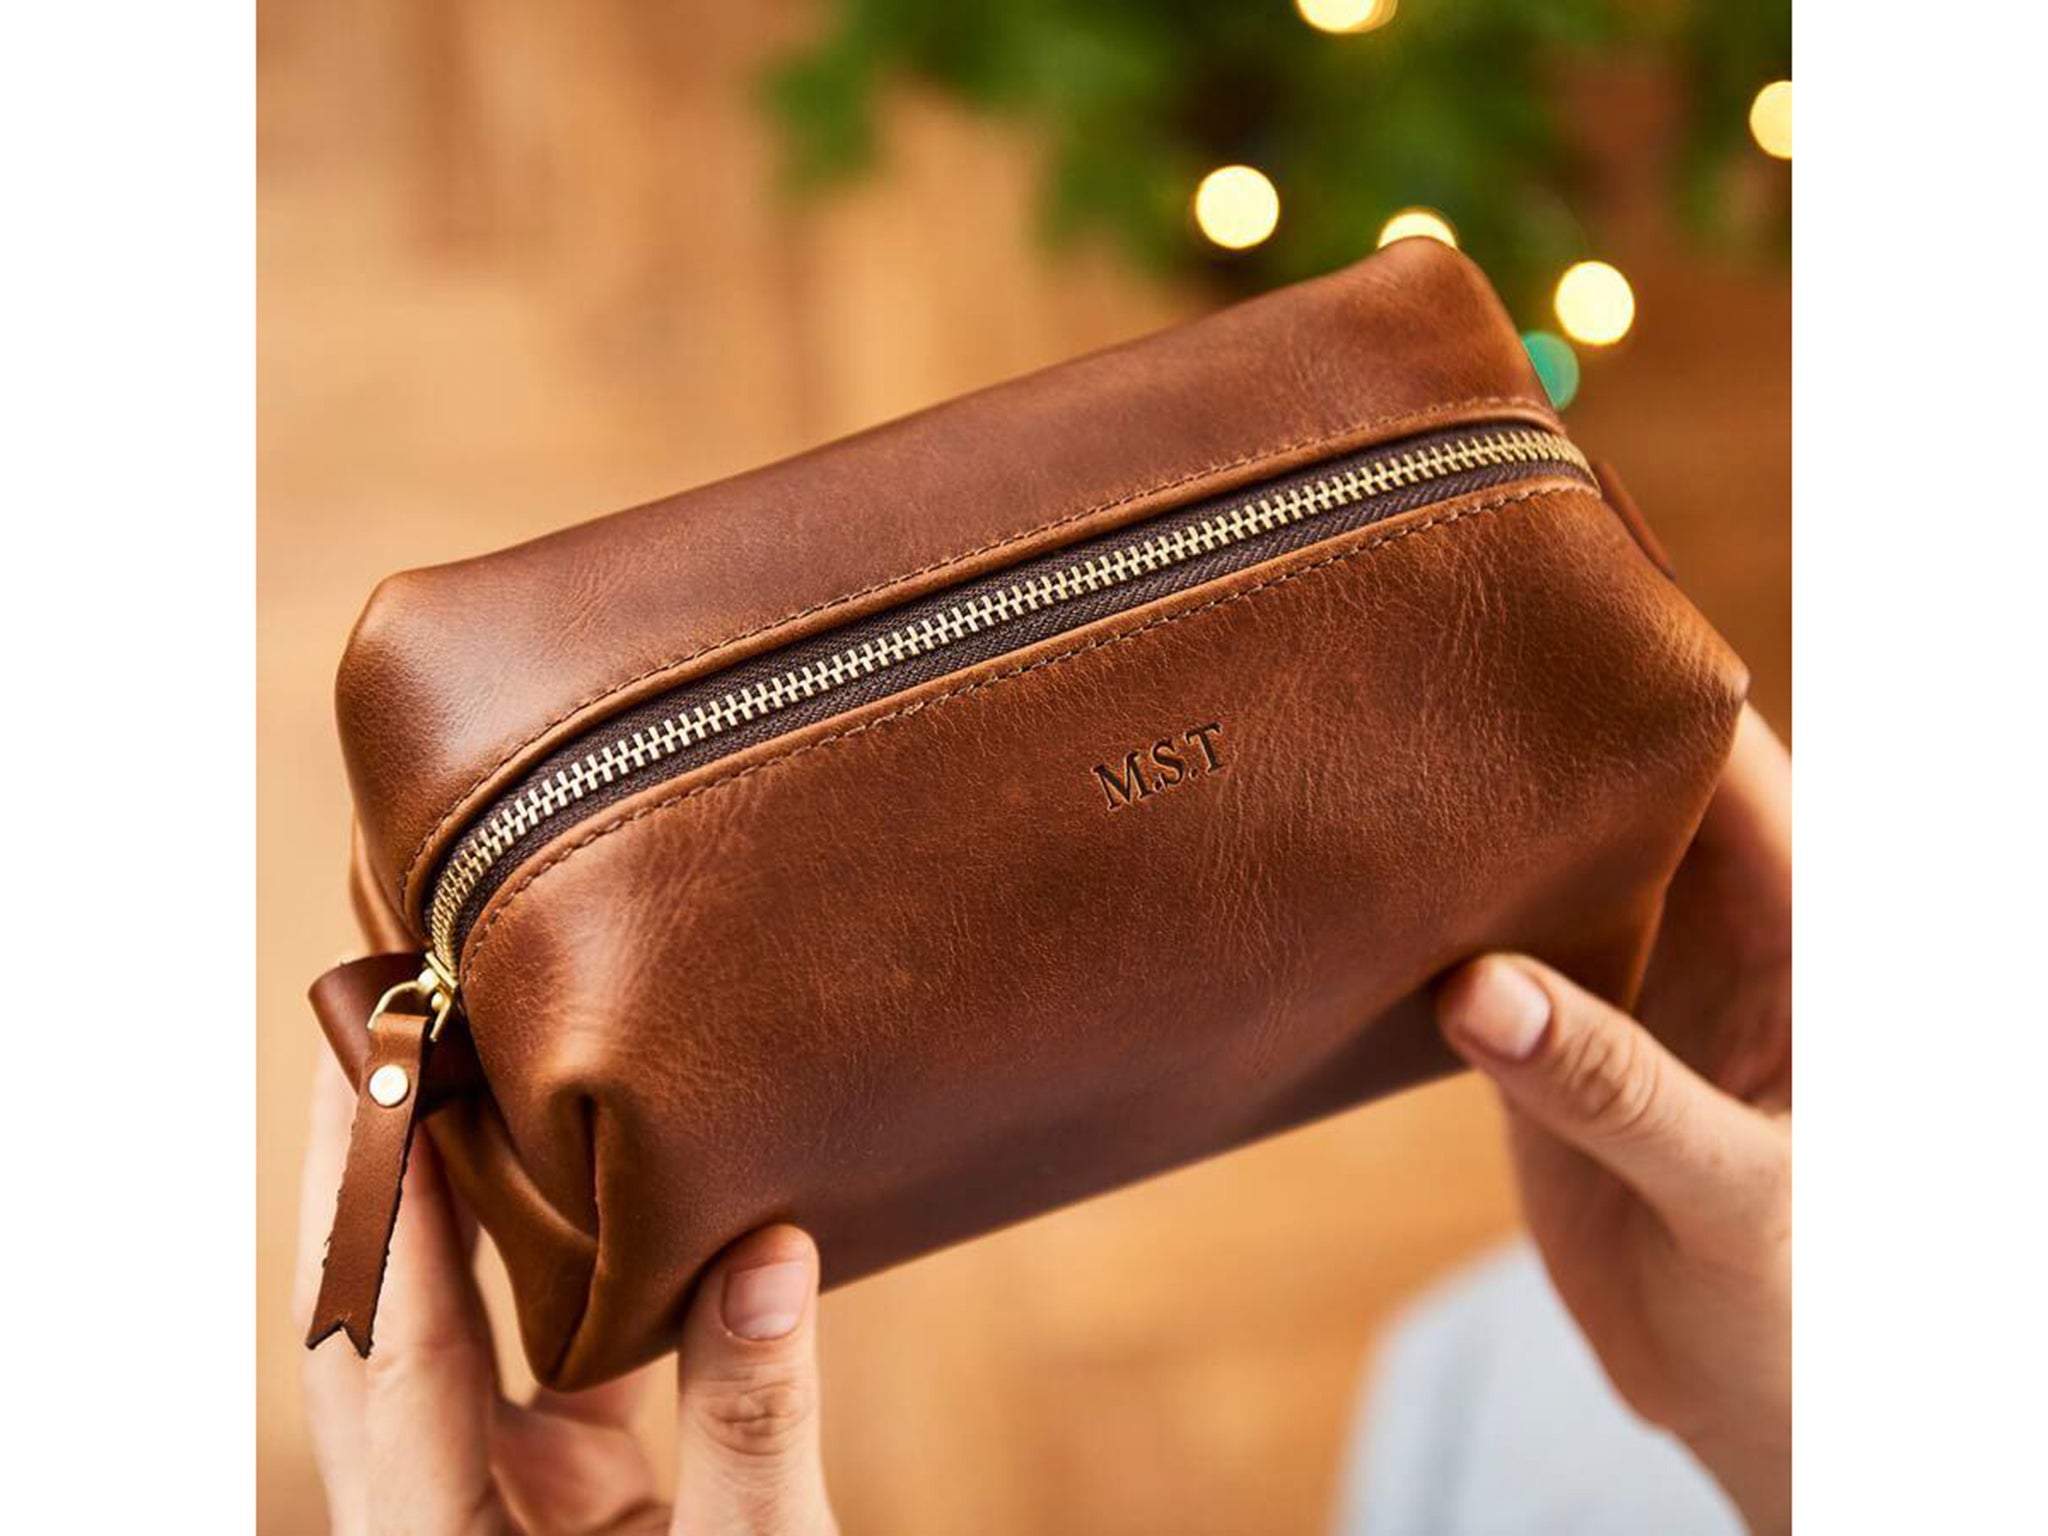 indybest-charity-christmas-gift-panel-tan-leather-wash-bag.jpeg